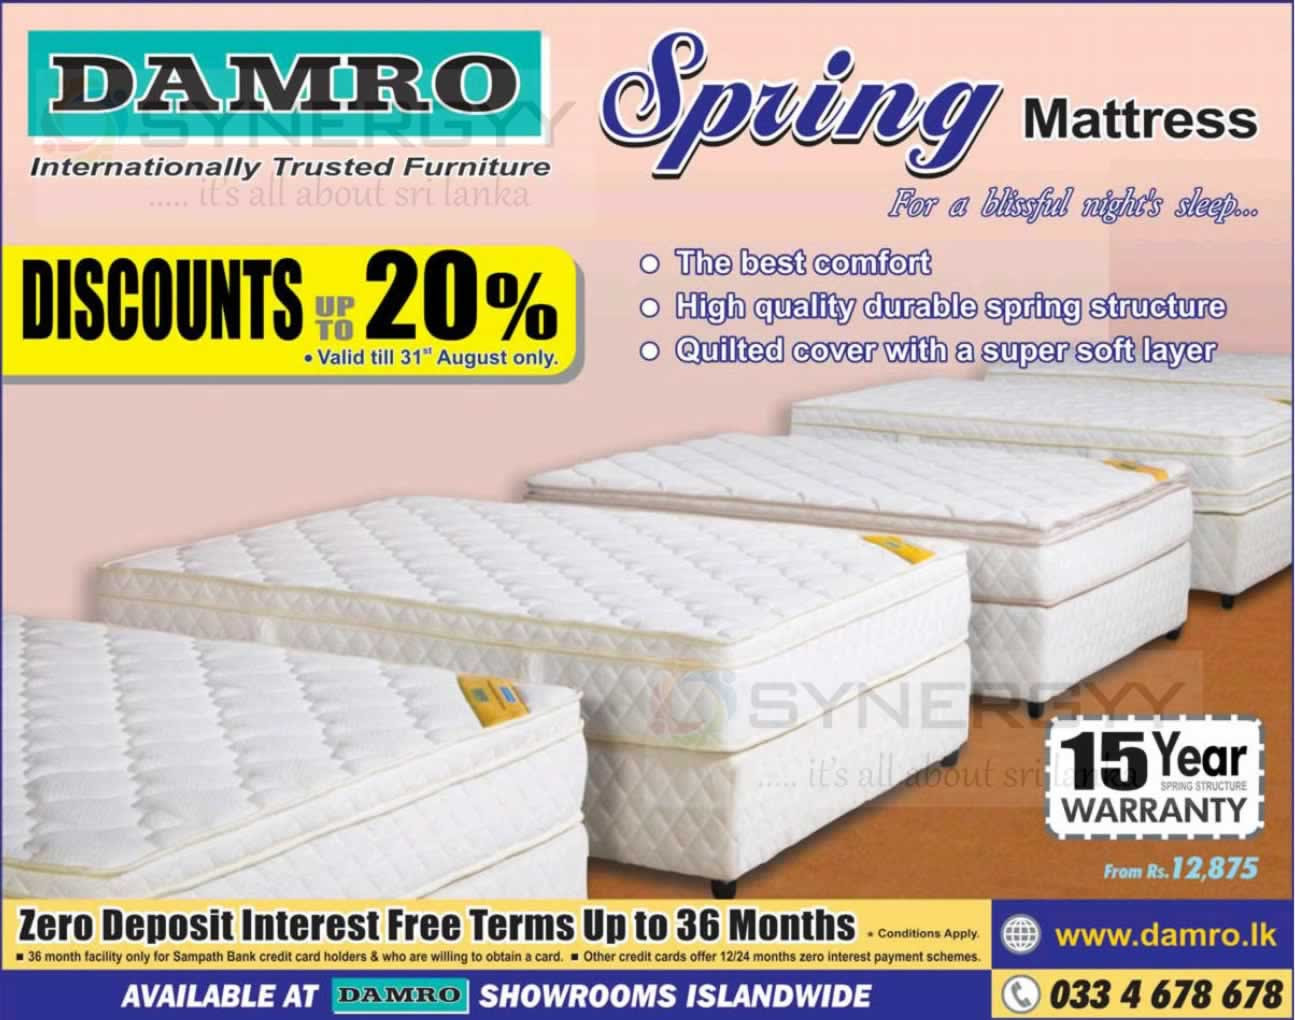 damro mattress sizes and prices sri lanka